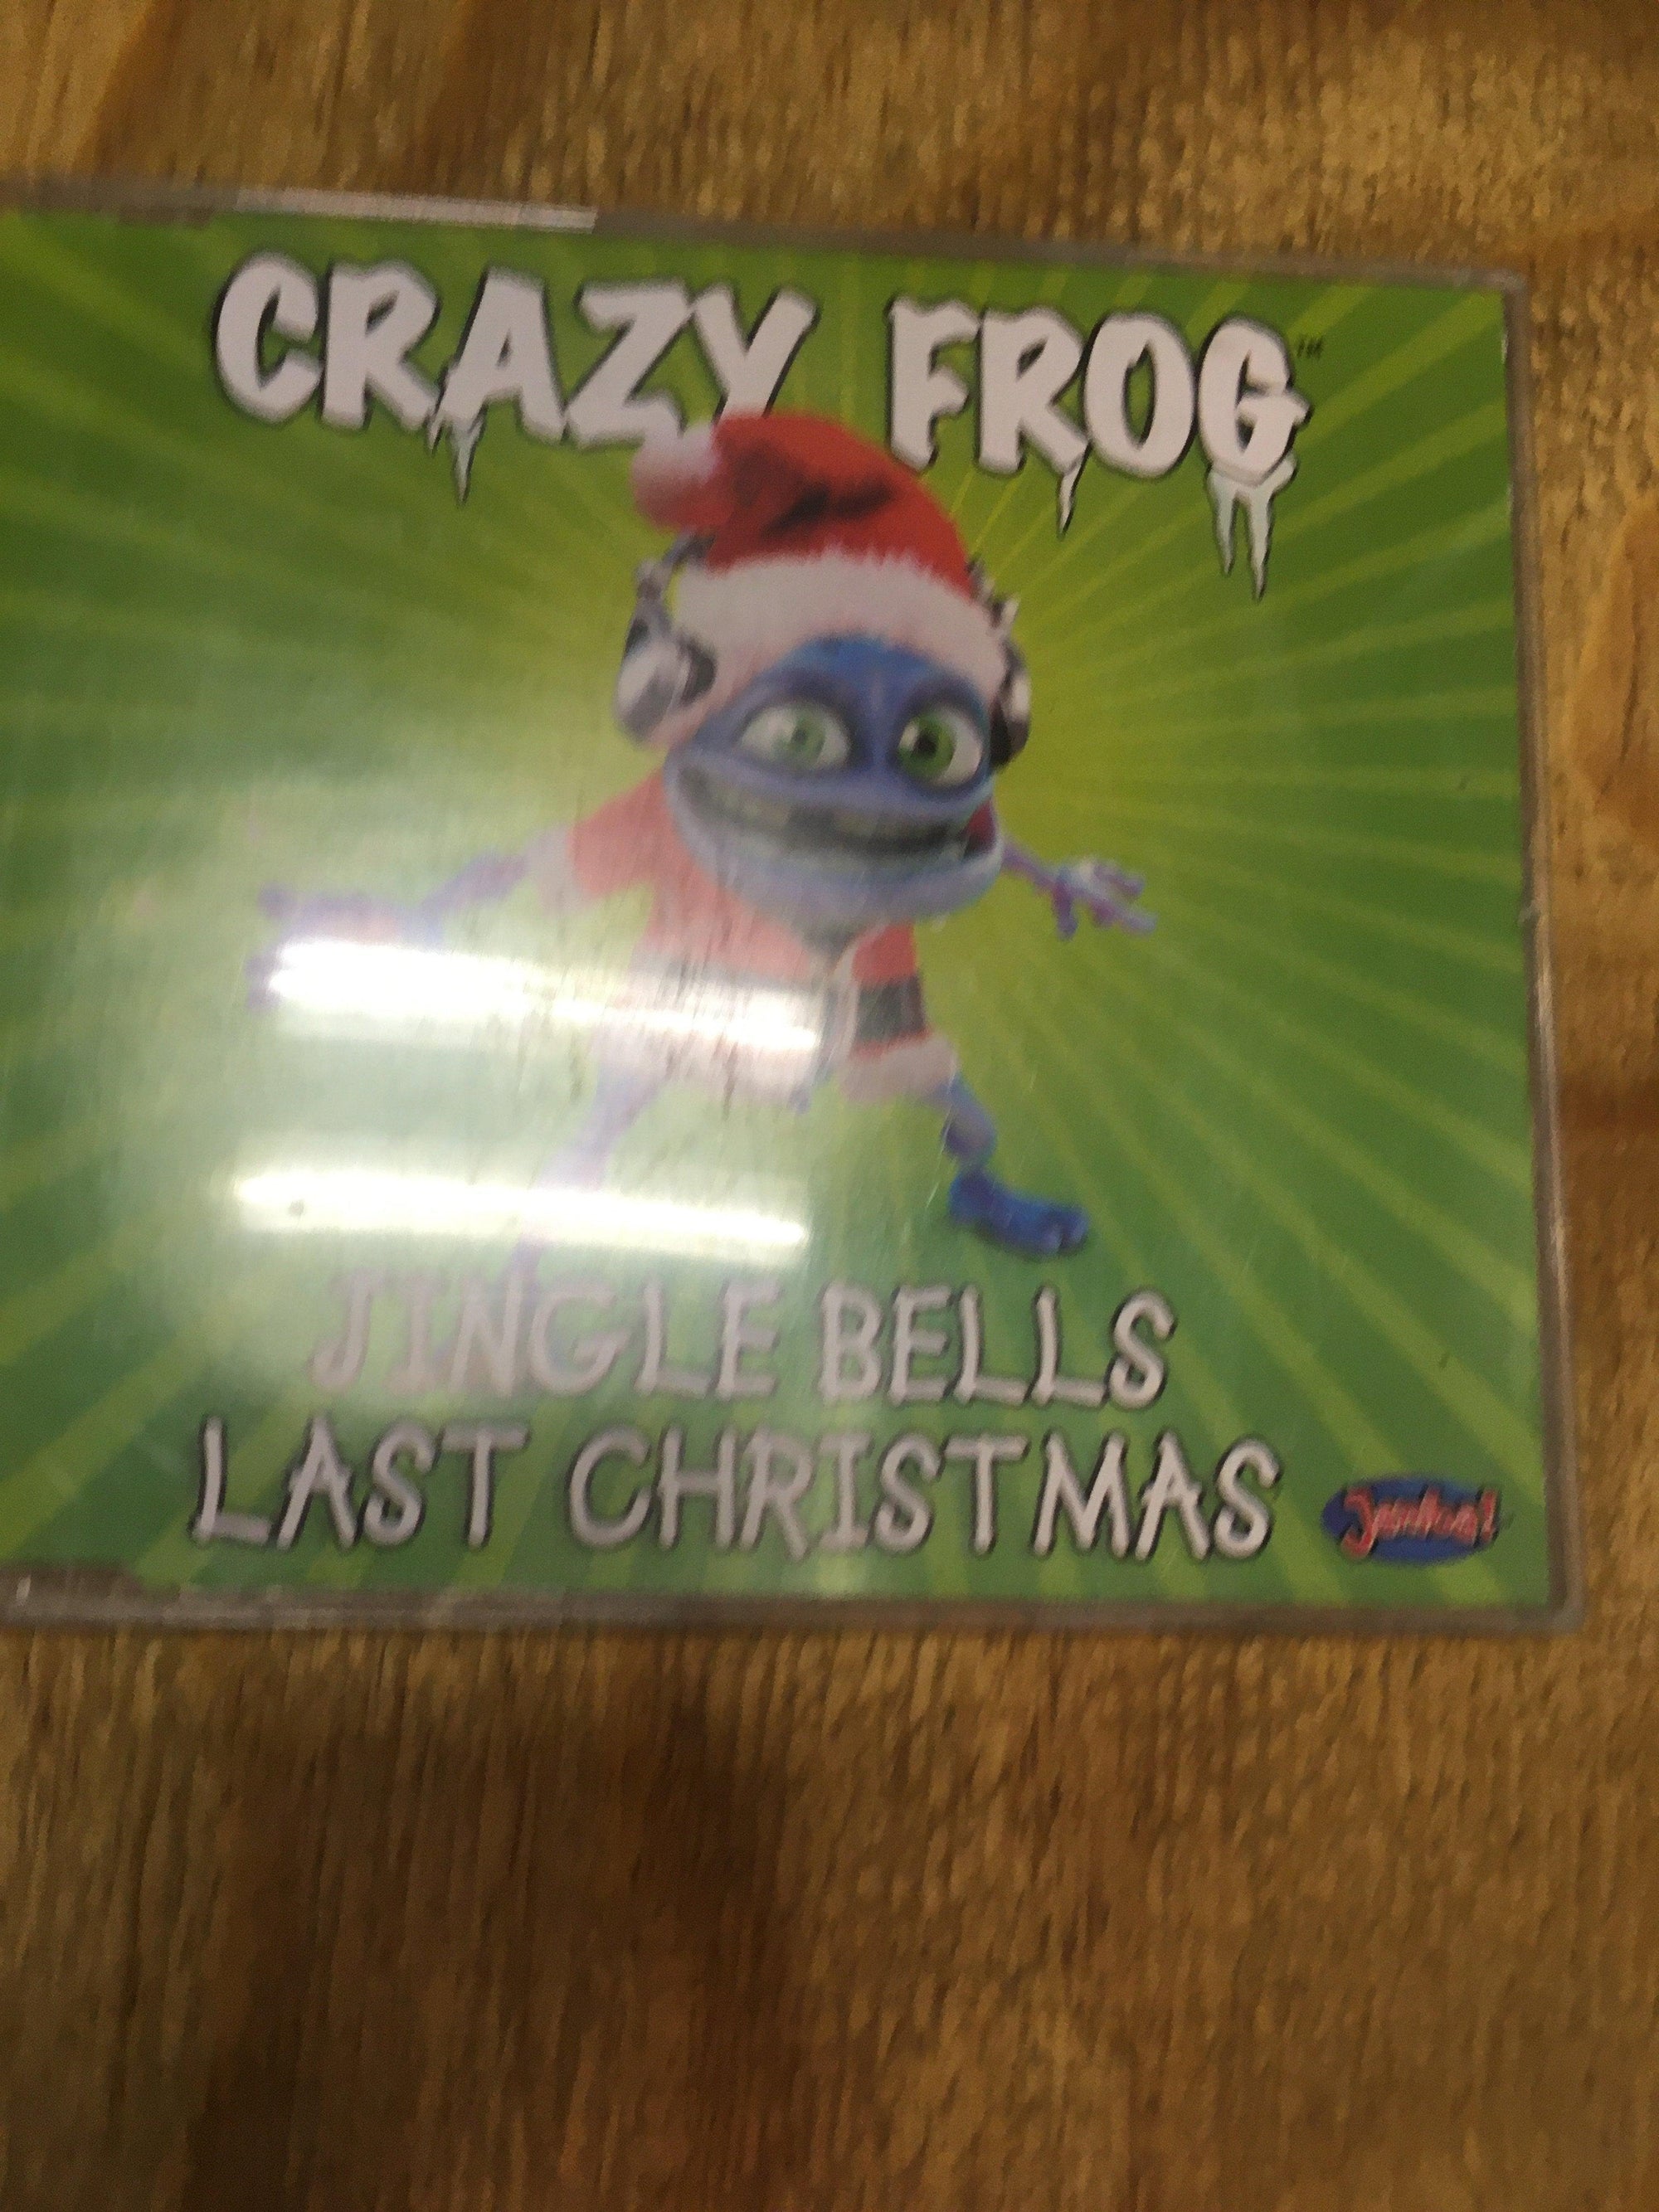 Crazy Frog: Jingle Bells Last Christmas - CD - 2ndhandwarehouse.com